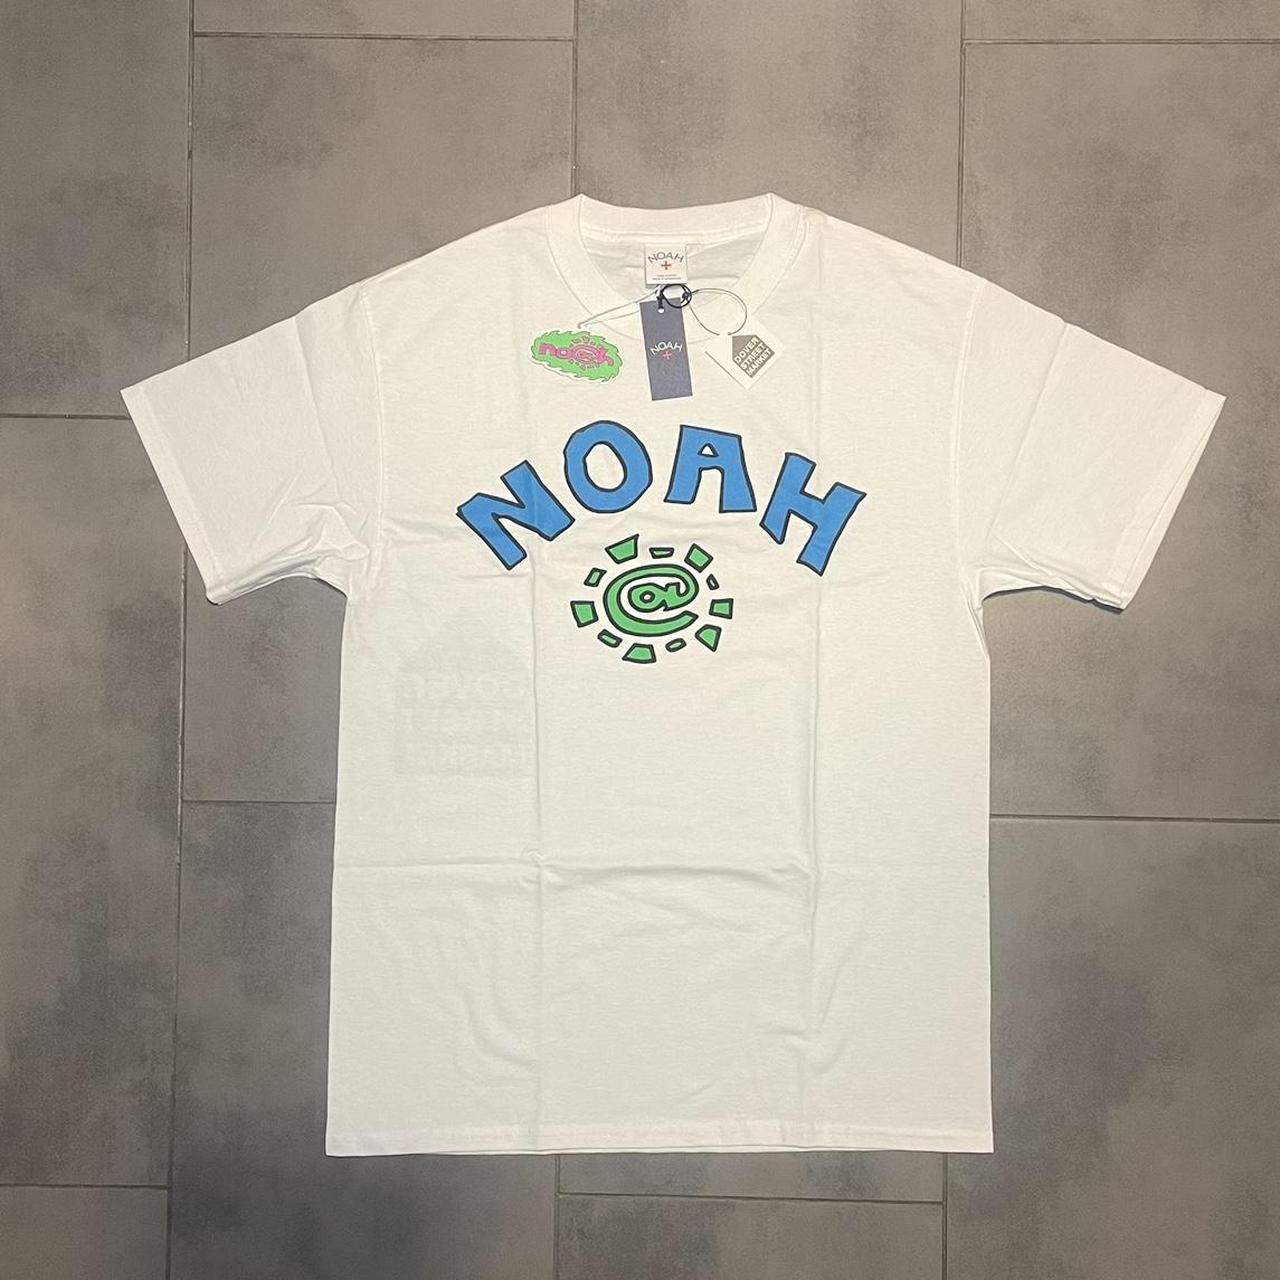 Adwysd x Noah T-Shirt DSM exclusive ✓ Brand new - Depop